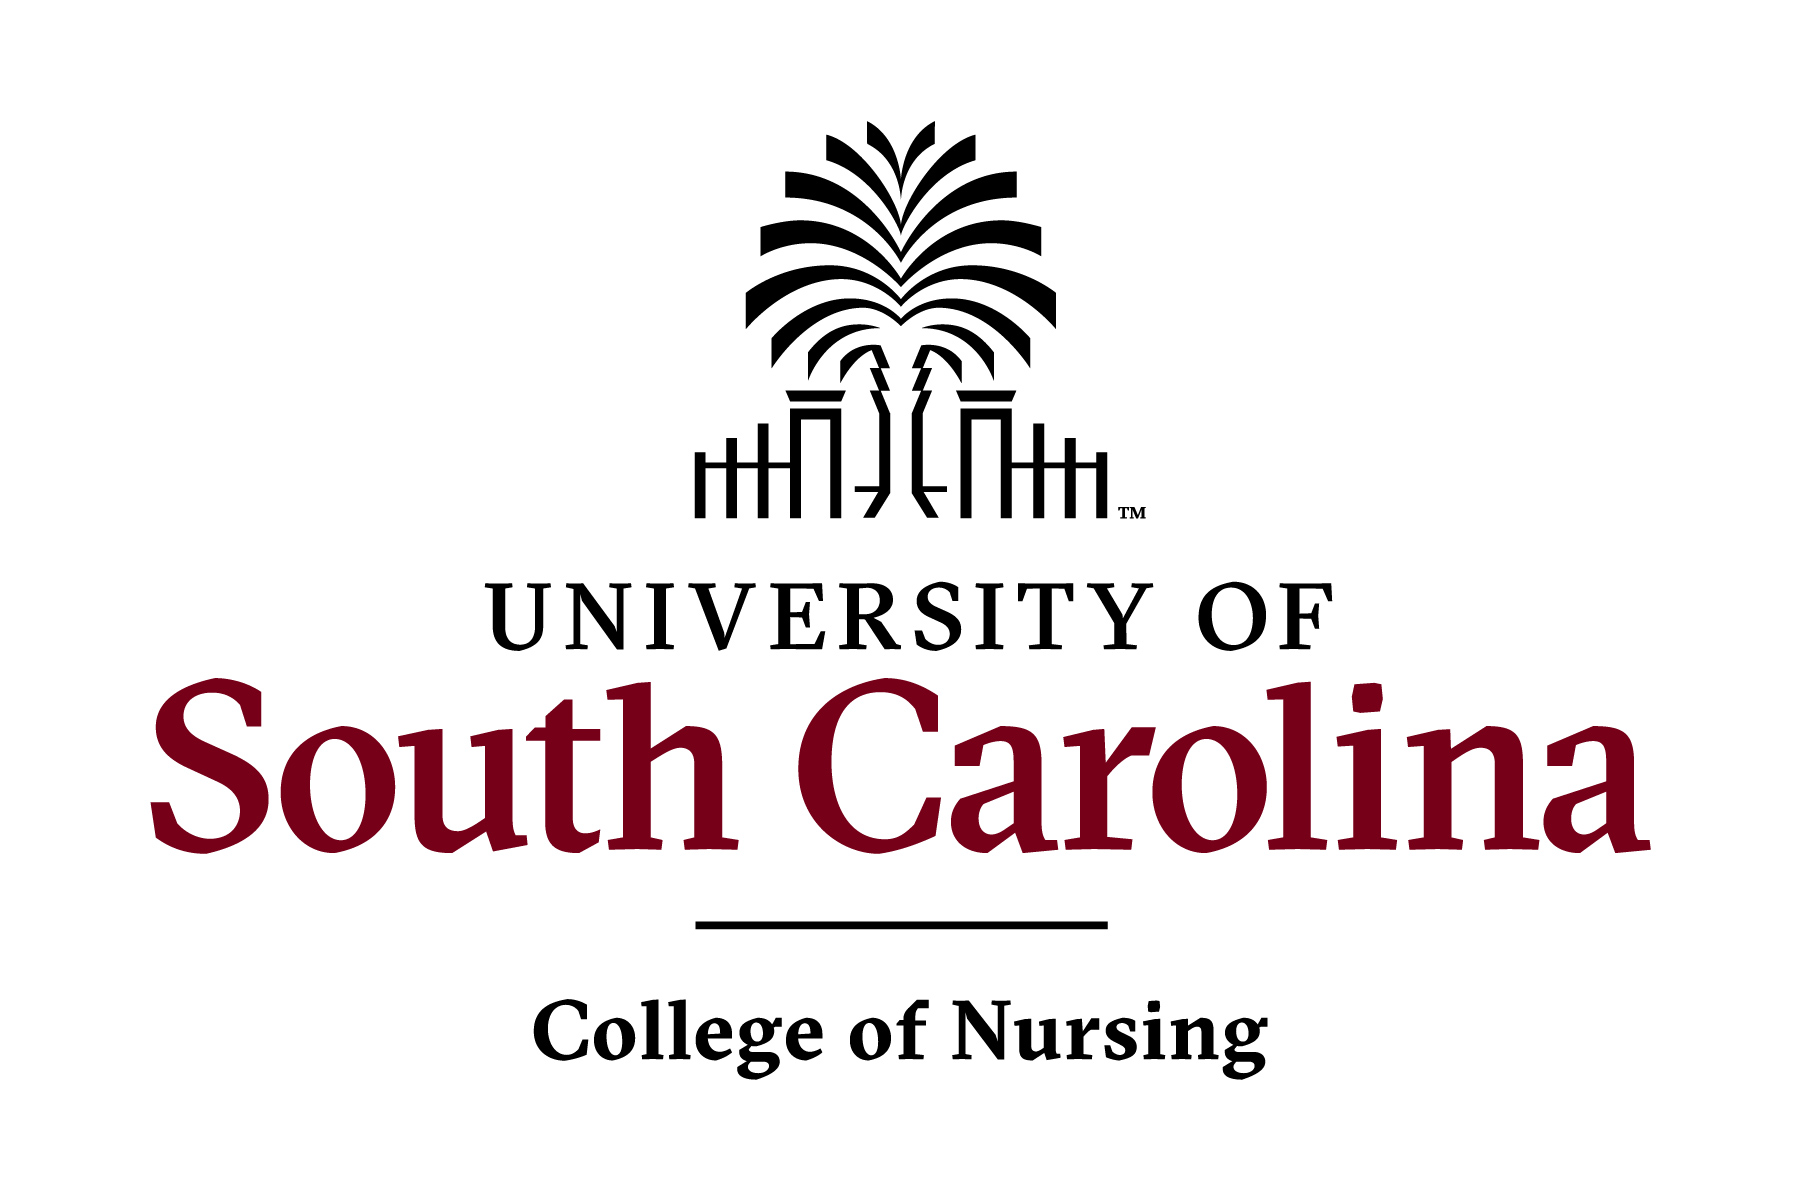 University of South Carolina College of Nursing - Exhibitor